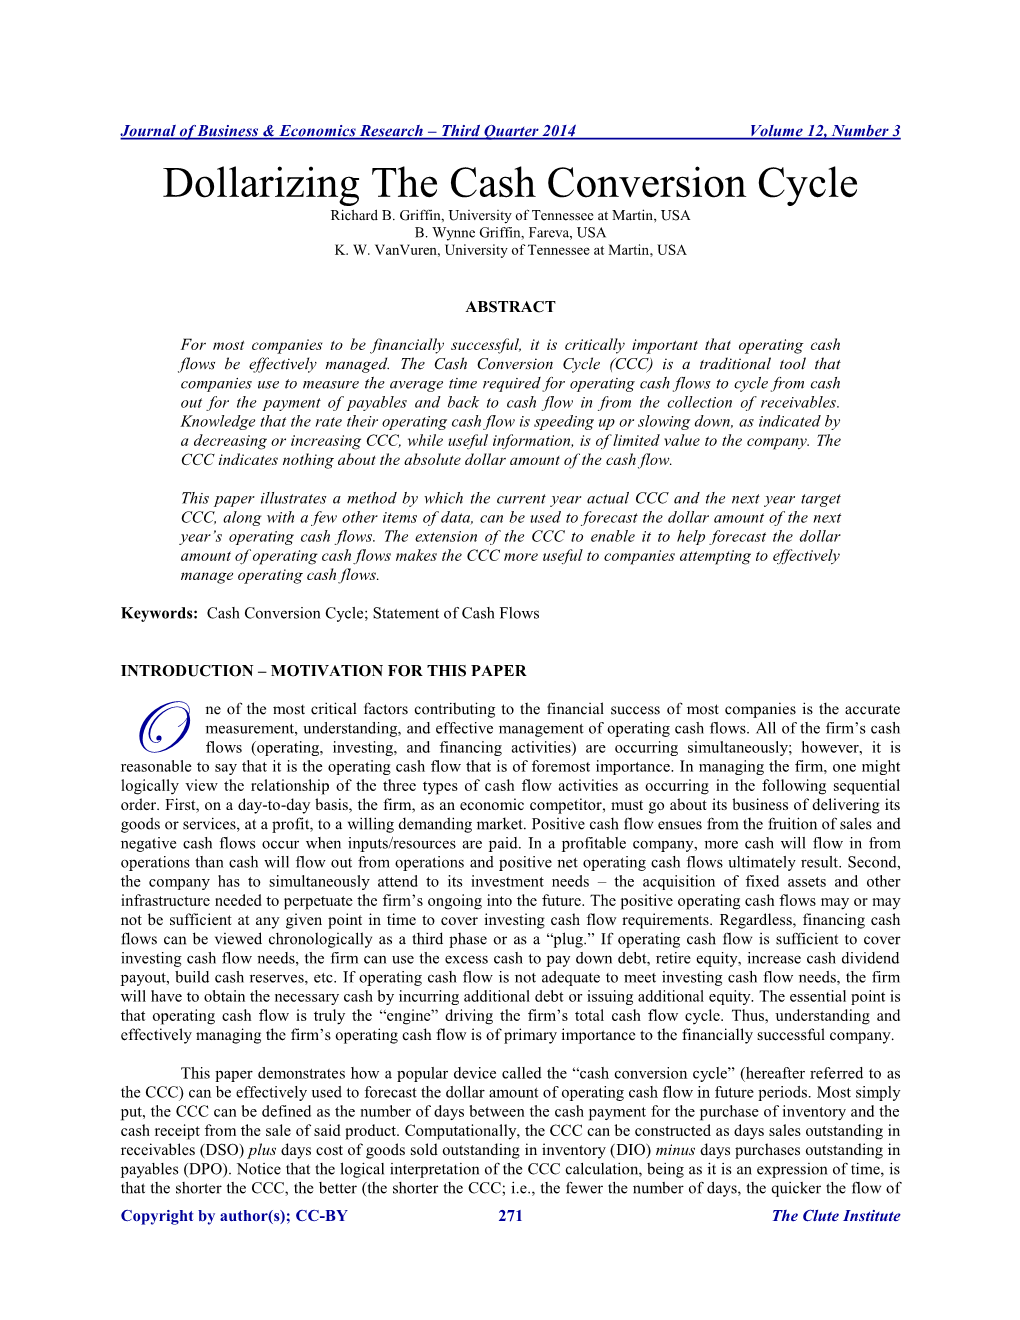 Dollarizing the Cash Conversion Cycle Richard B